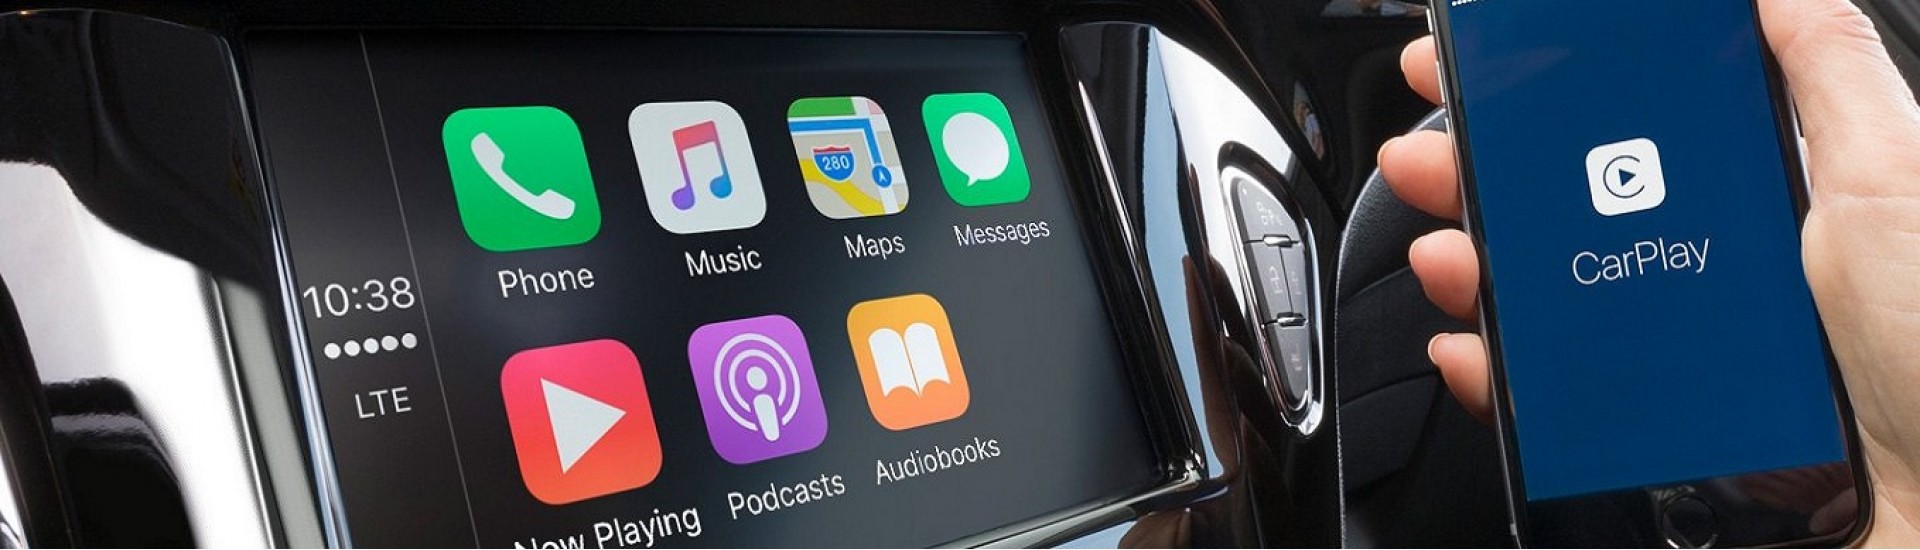 ضبط اپل کار پلی تویوتا یاریس SE 2015 